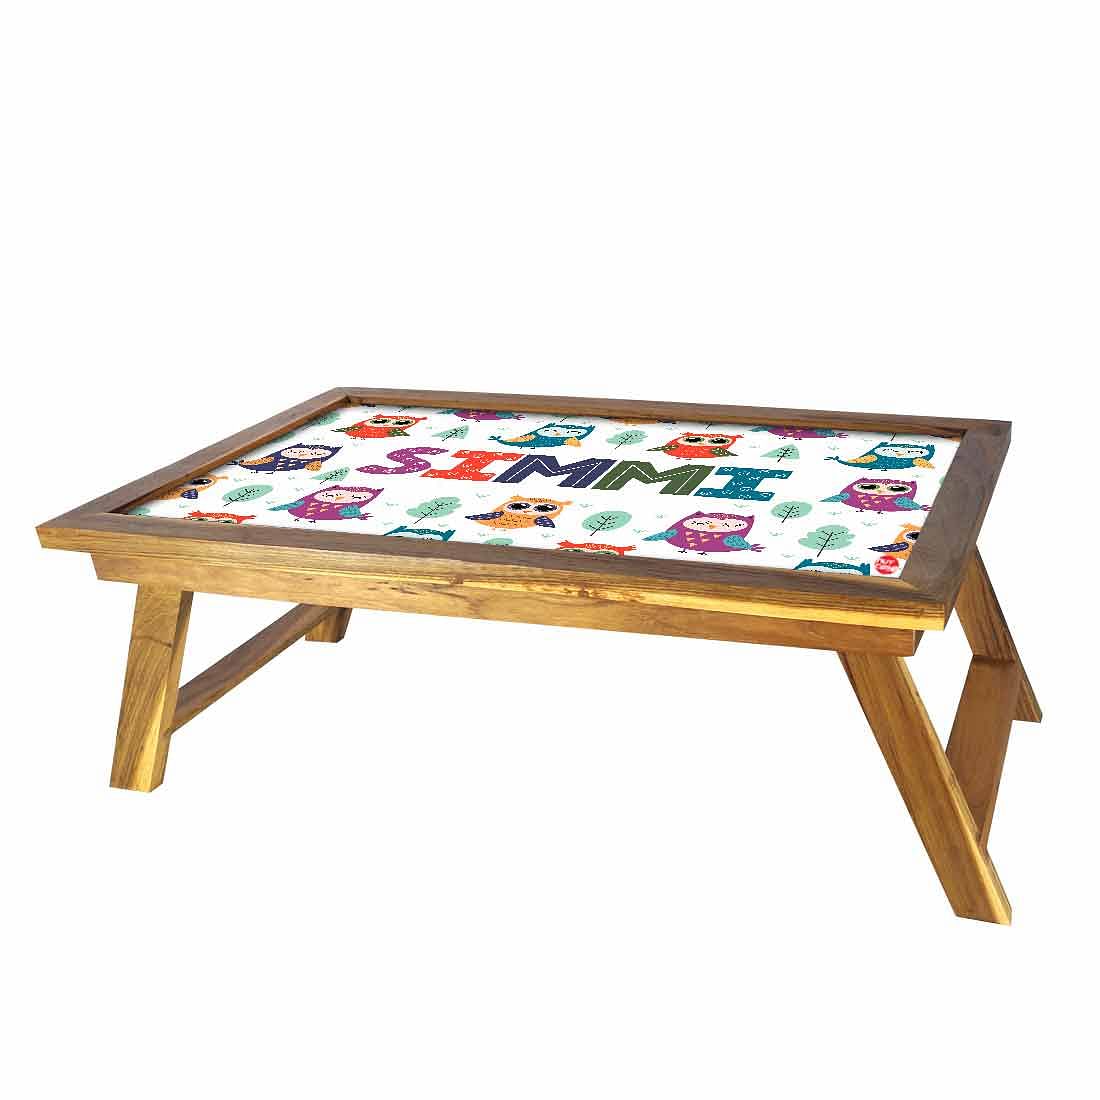 Custom-Made Foldable Bed Table - Cute Owl Nutcase